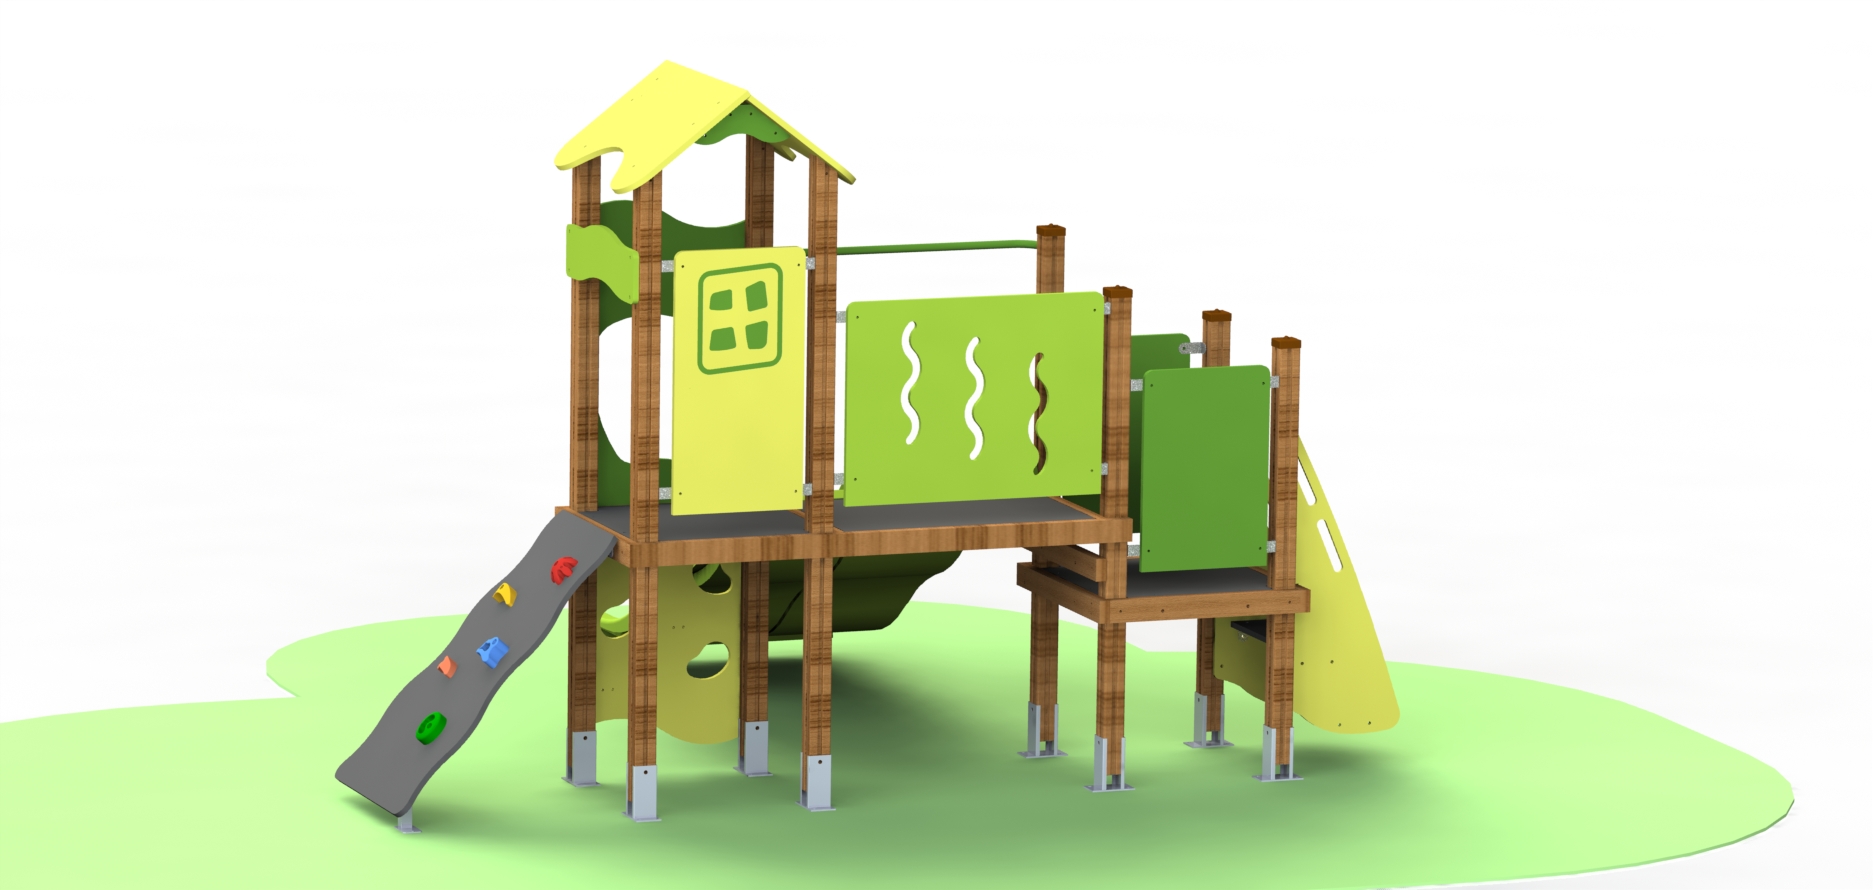 Combined playground equipment, model КДM136